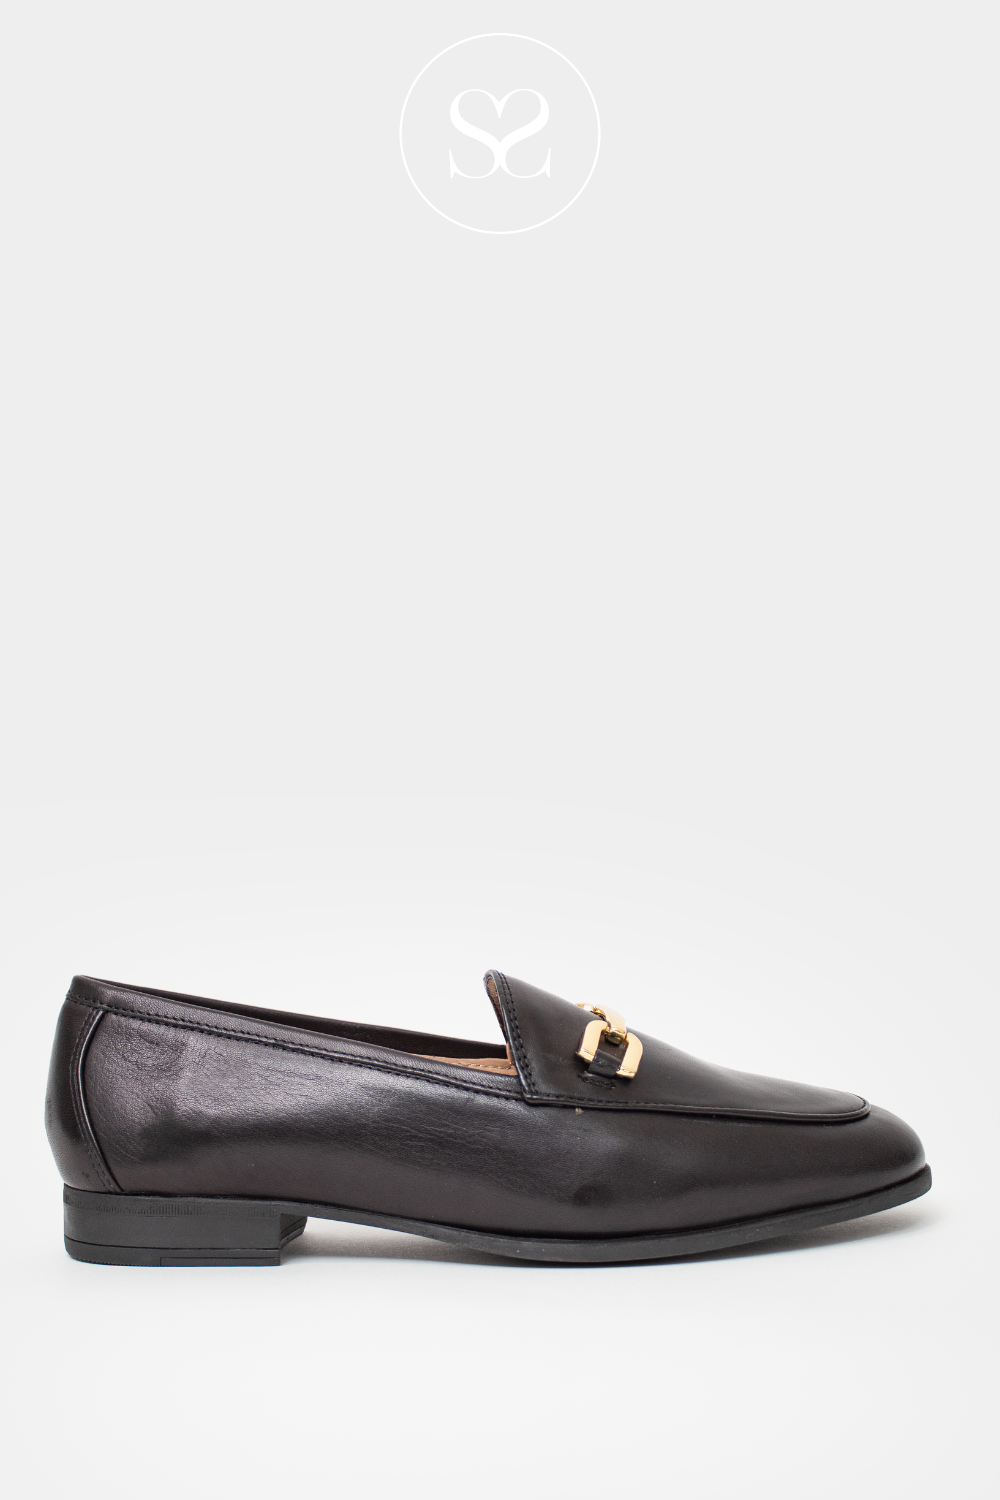 UNISA DAIMIEL - BLACK LEATHER LOAFERS – Sheneil Shoes